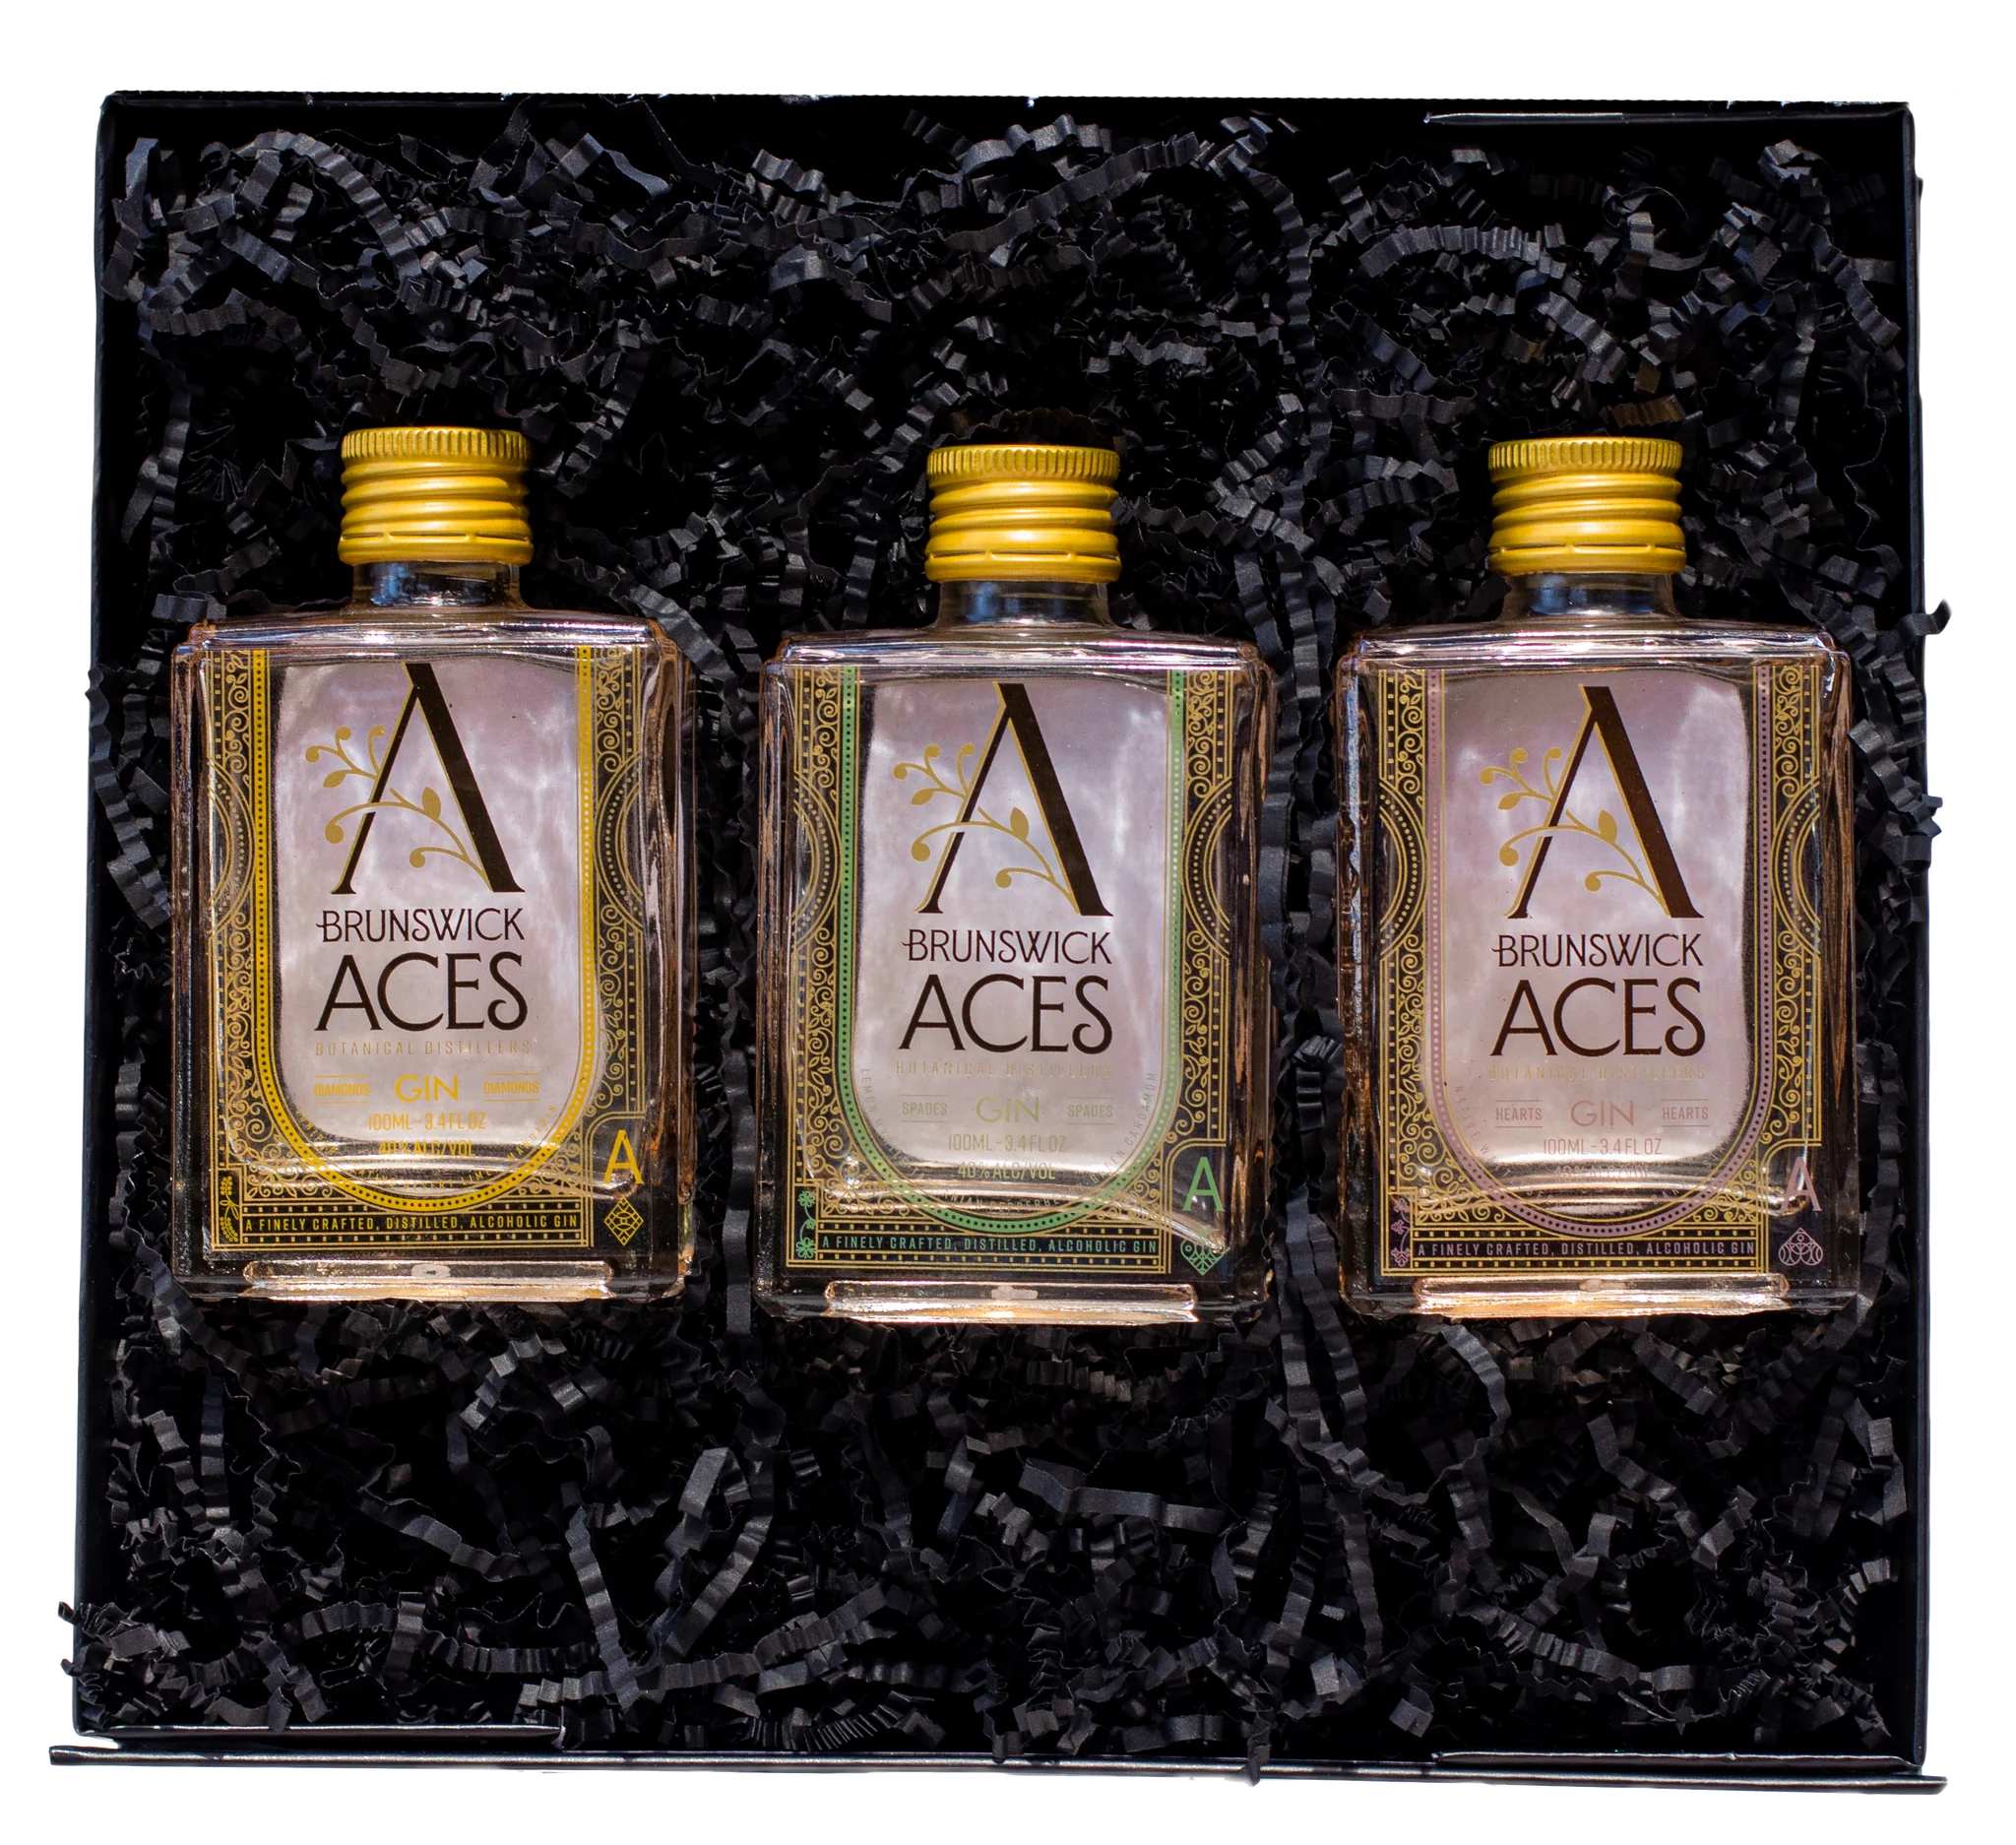 - Gin (40%) Pack Aces Brunswick Aces Brunswick Sample